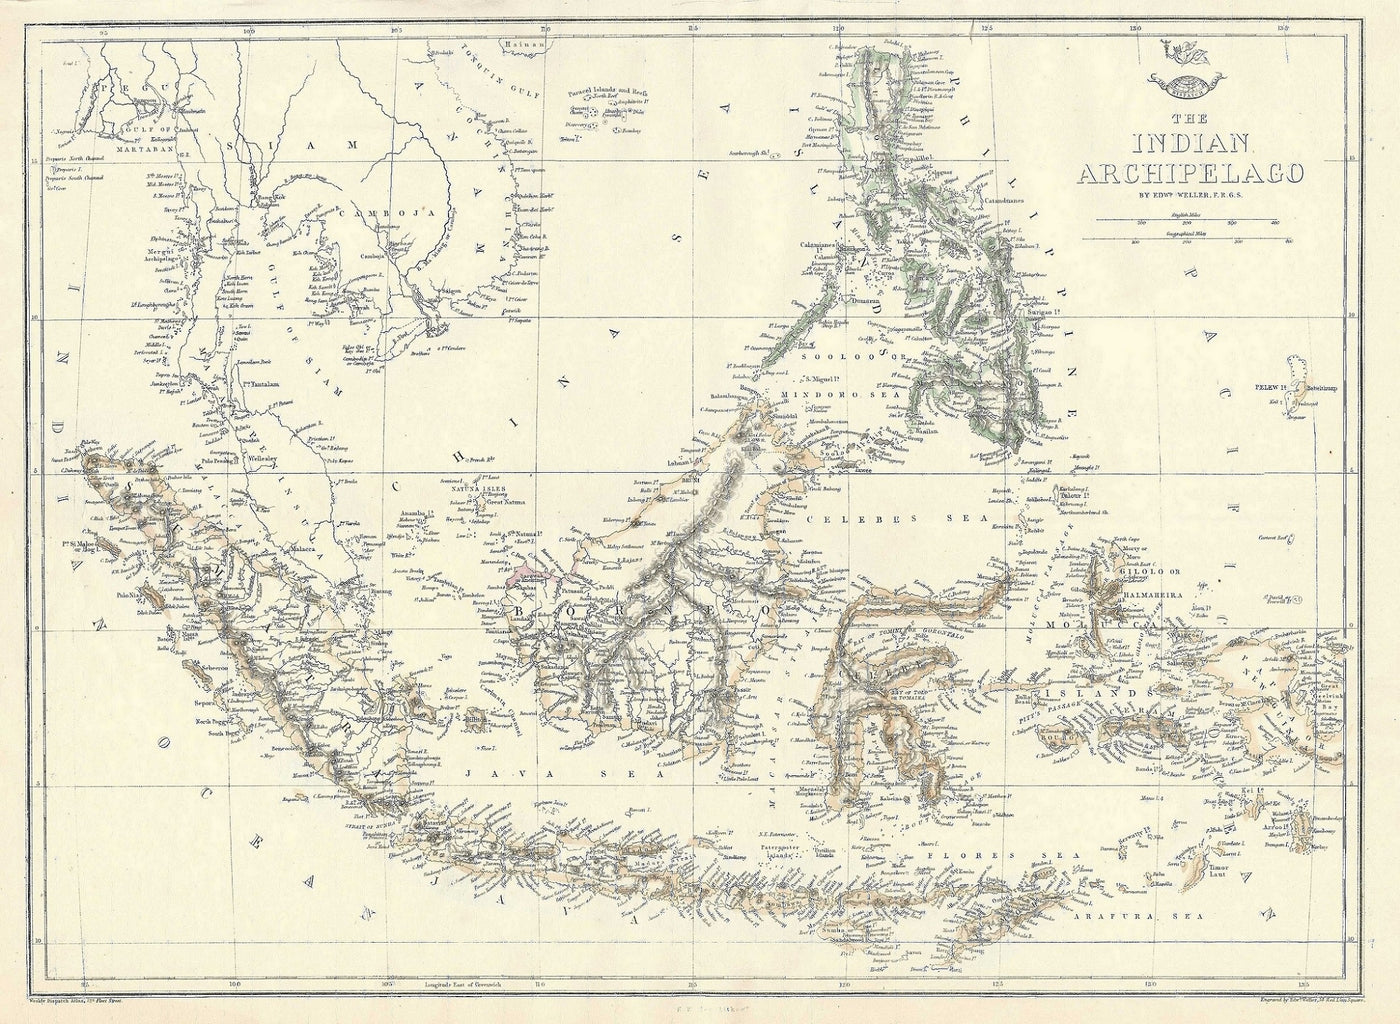 Indonesian Archipelago antique map published 1863